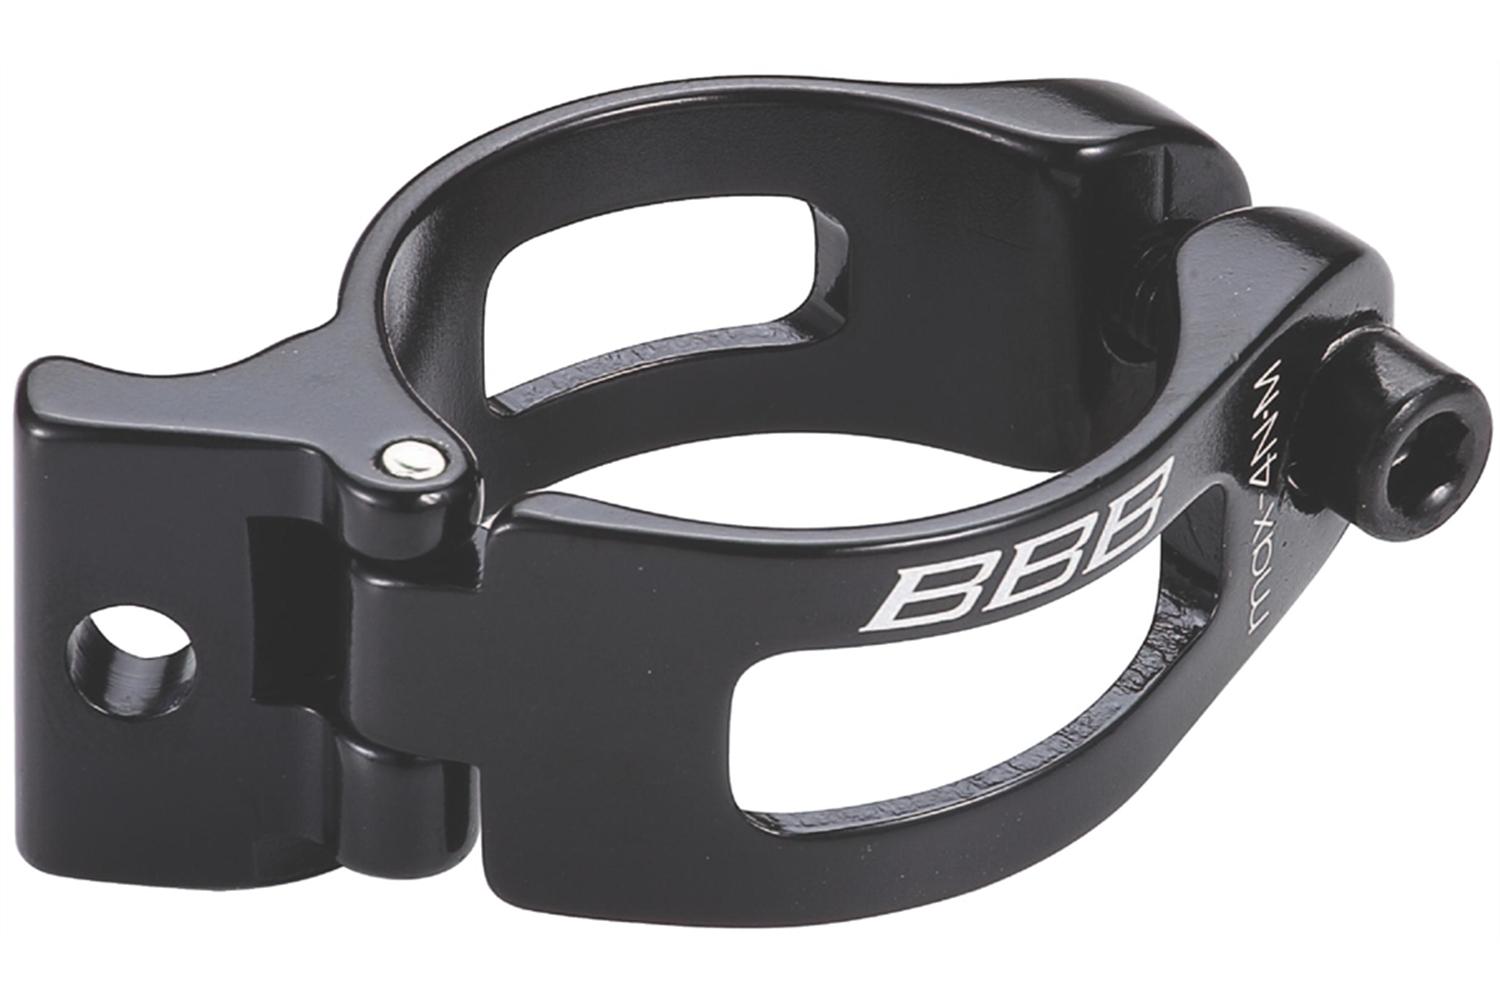 Bbb Bsp-90 Shiftfix Front Derailleur Clamp - Black